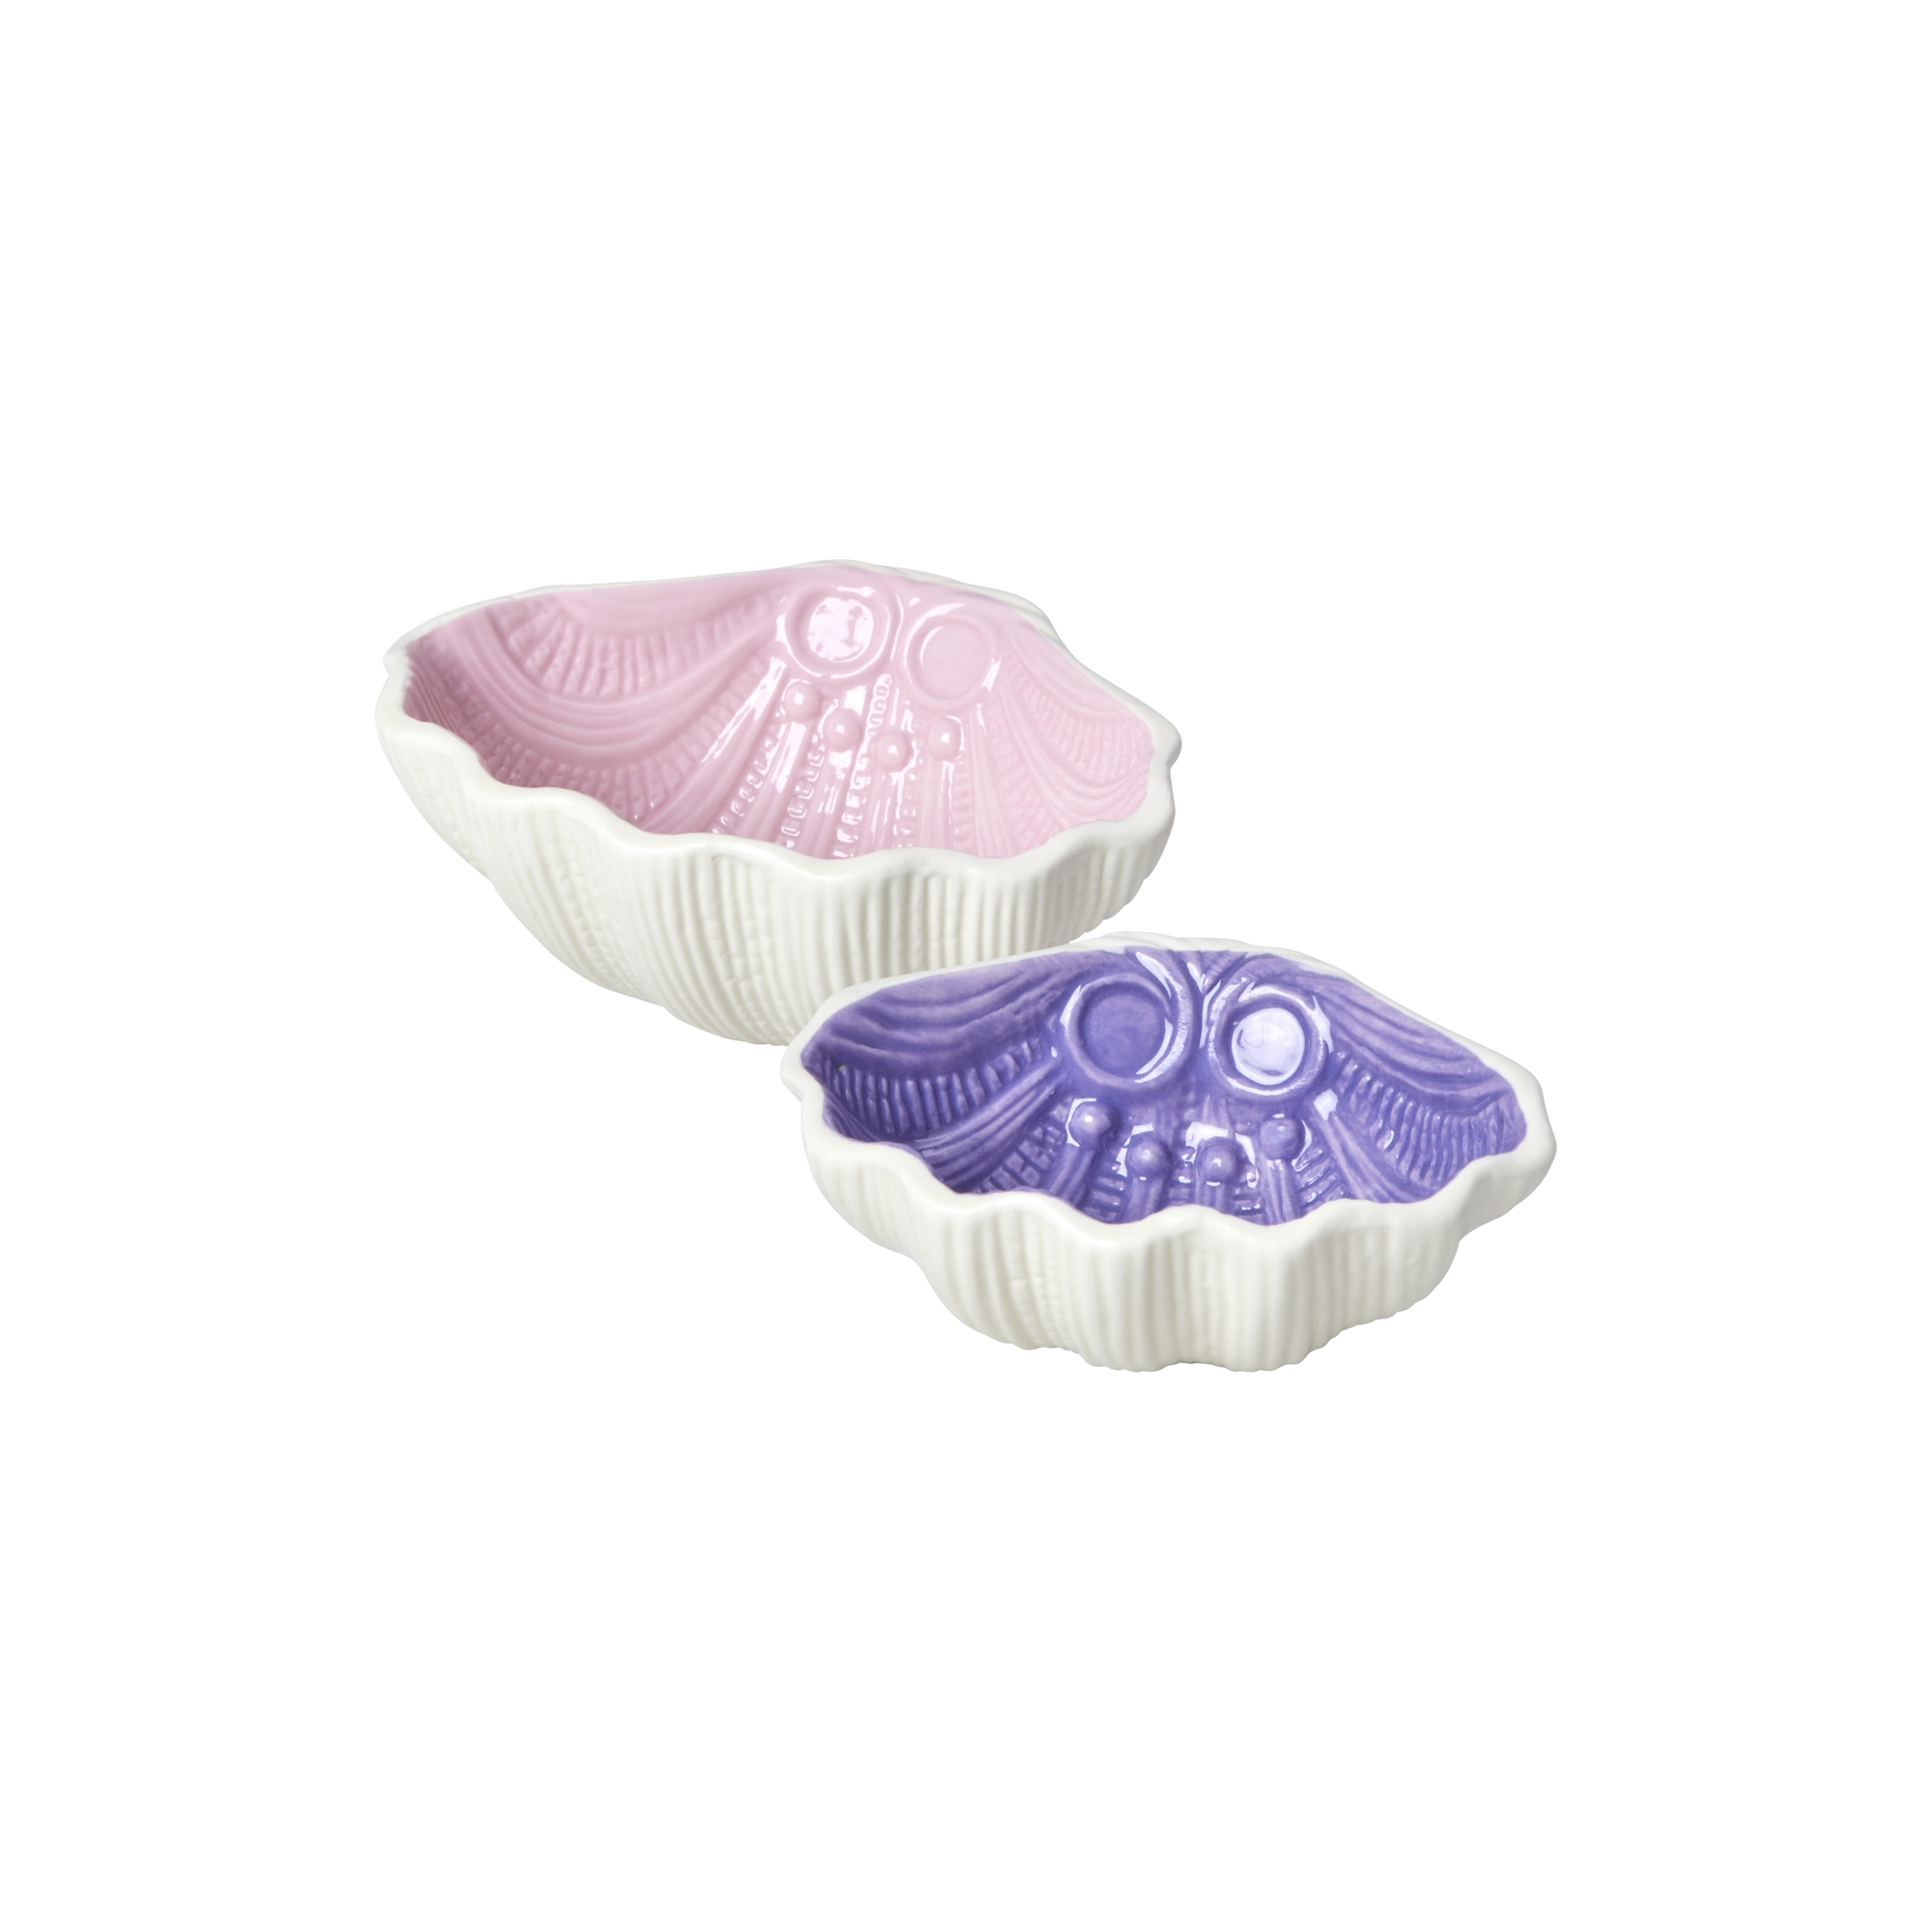 Rice - Ceramic Shell Bowl in Lavender and Pink - Set of 2 - Hjemme og kjøkken